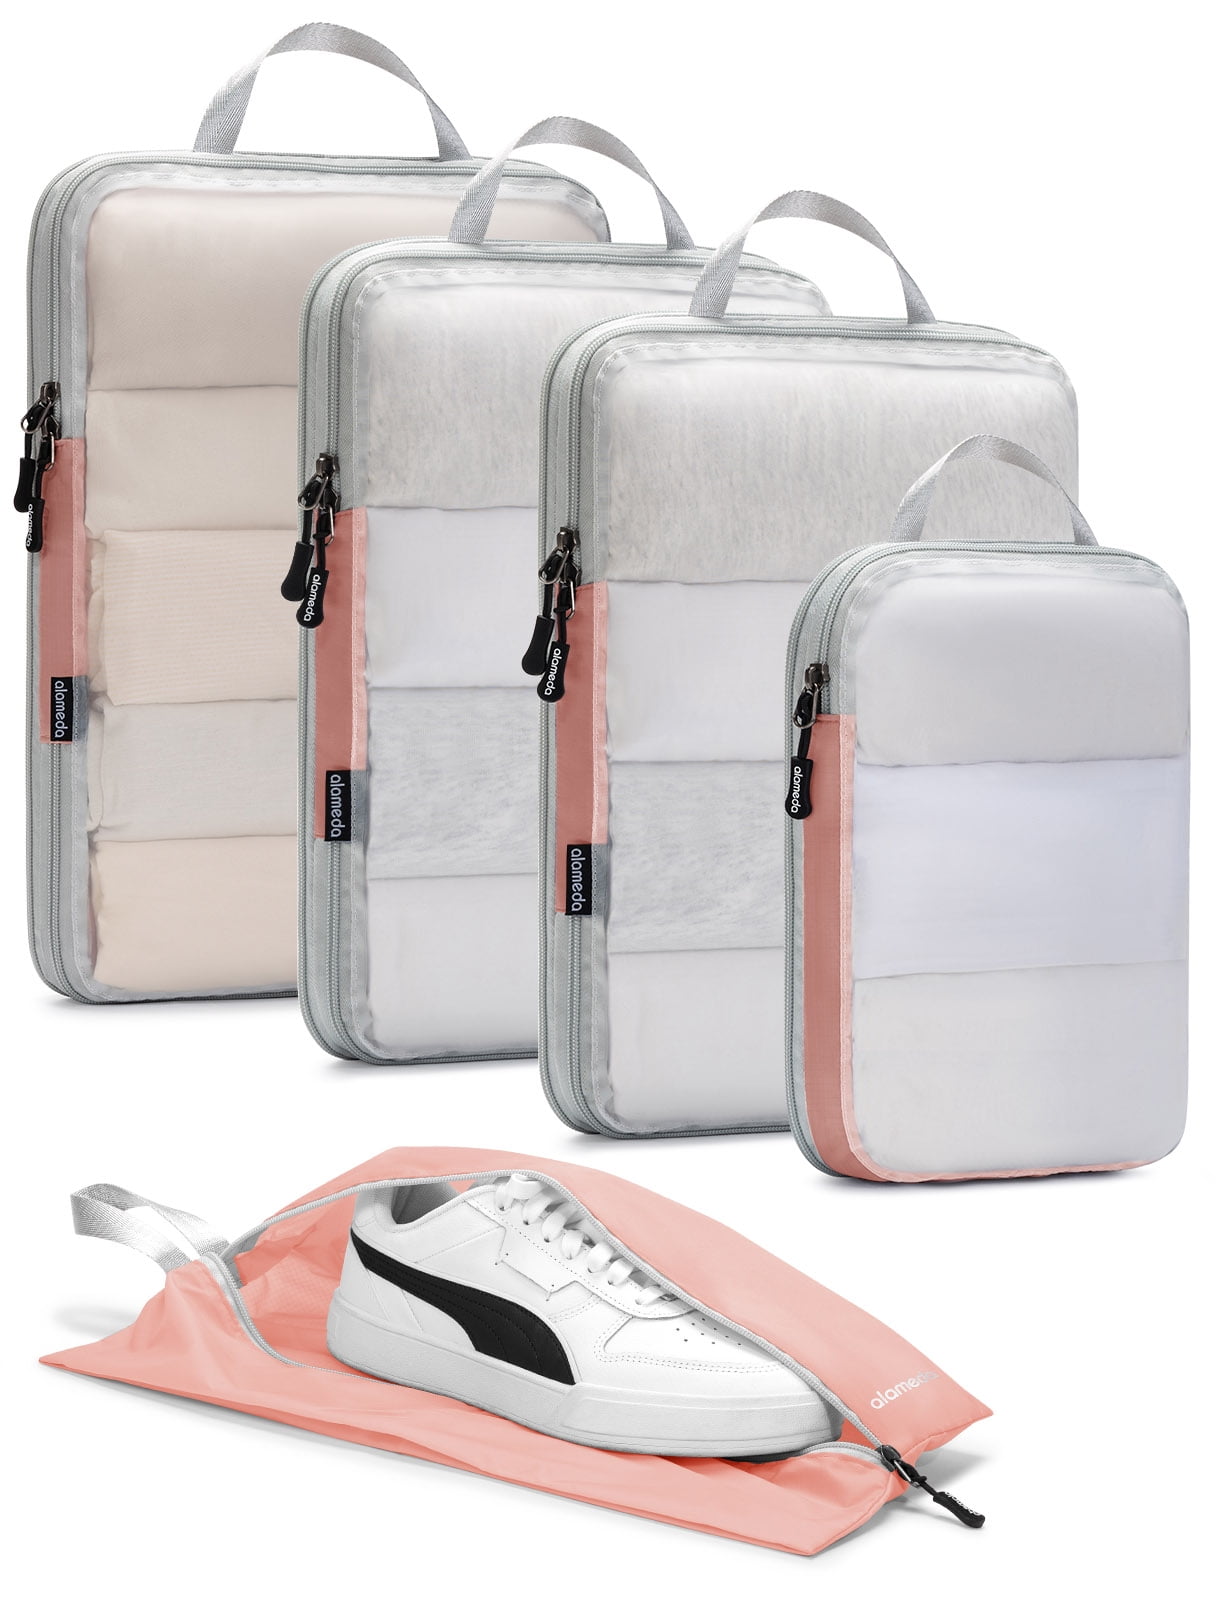 1x 90x120cm Travel Vacuum Bag, Zip Lock, Holiday Space Saving Suitcase  Luggage